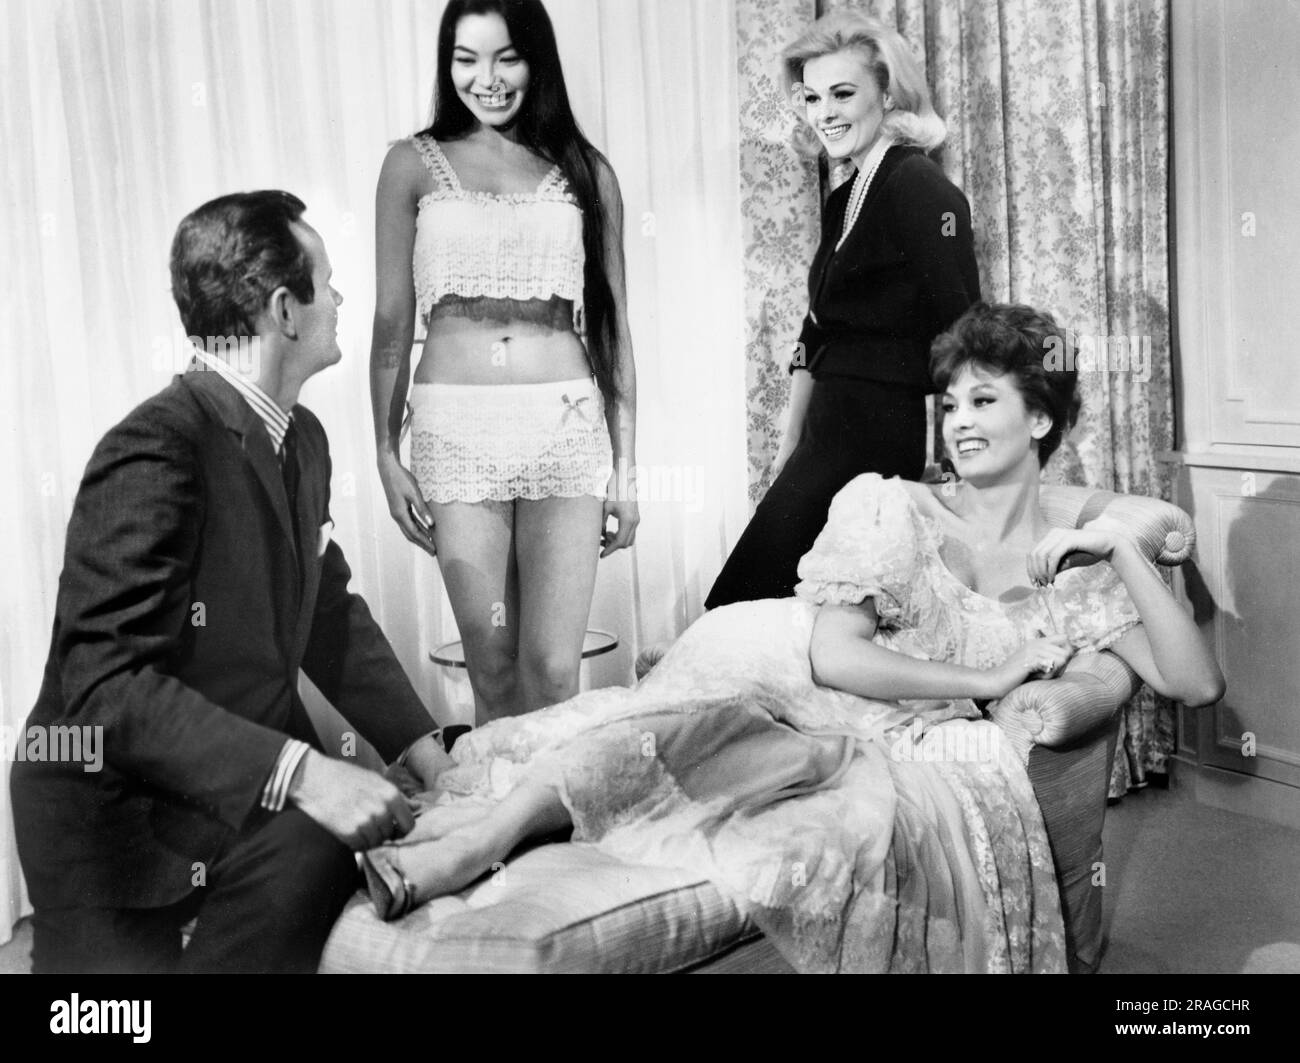 William Traylor, Nai Bonet, Paula Stewart, Jan Crockett, on-set of the Film, 'Diary Of A Bachelor', American International Pictures, 1964 Stock Photo